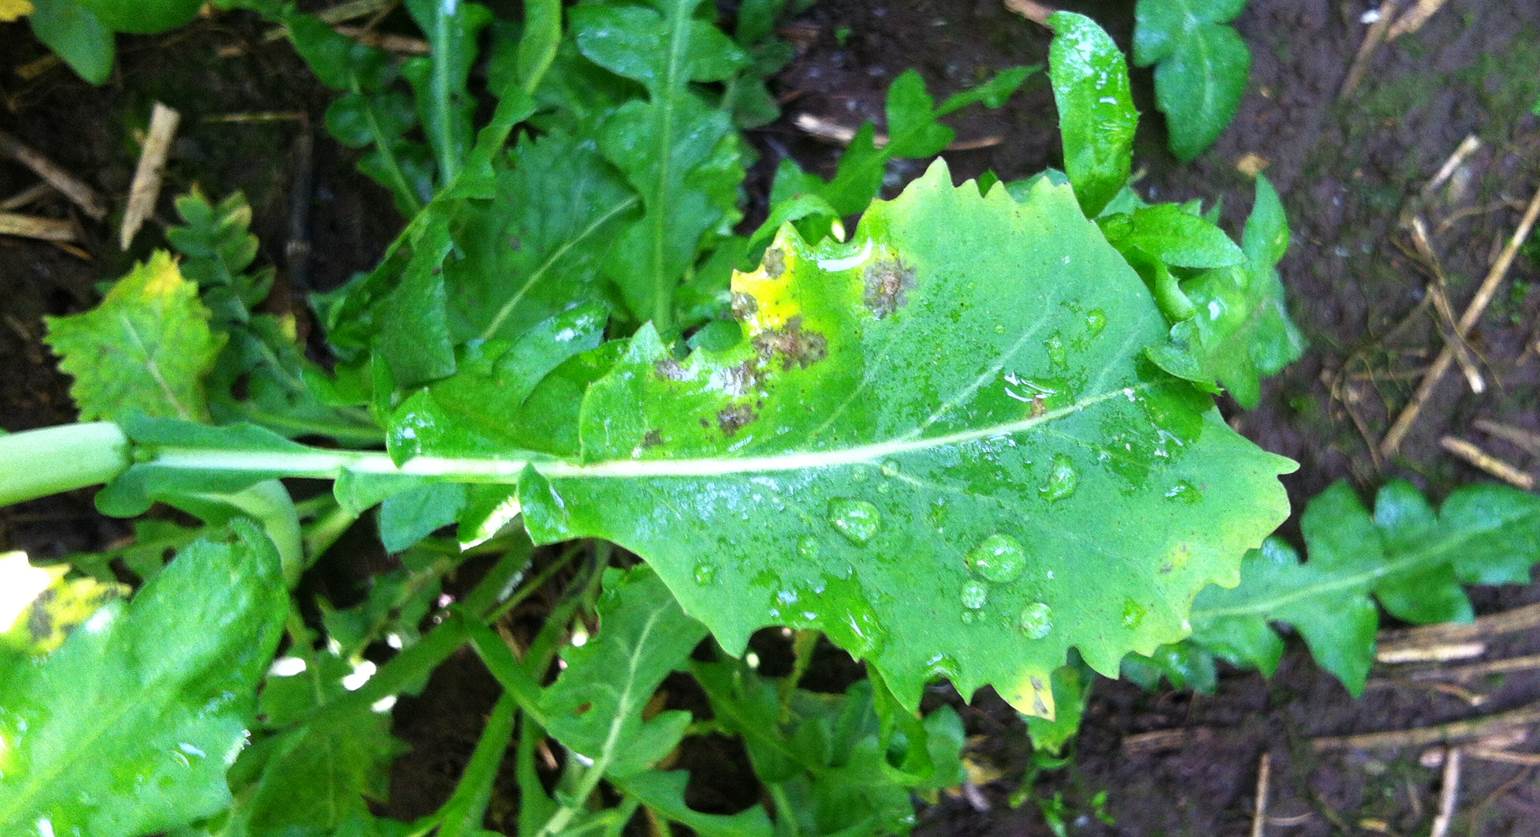 Regional variation in light leaf spot risk, says autumn forecast